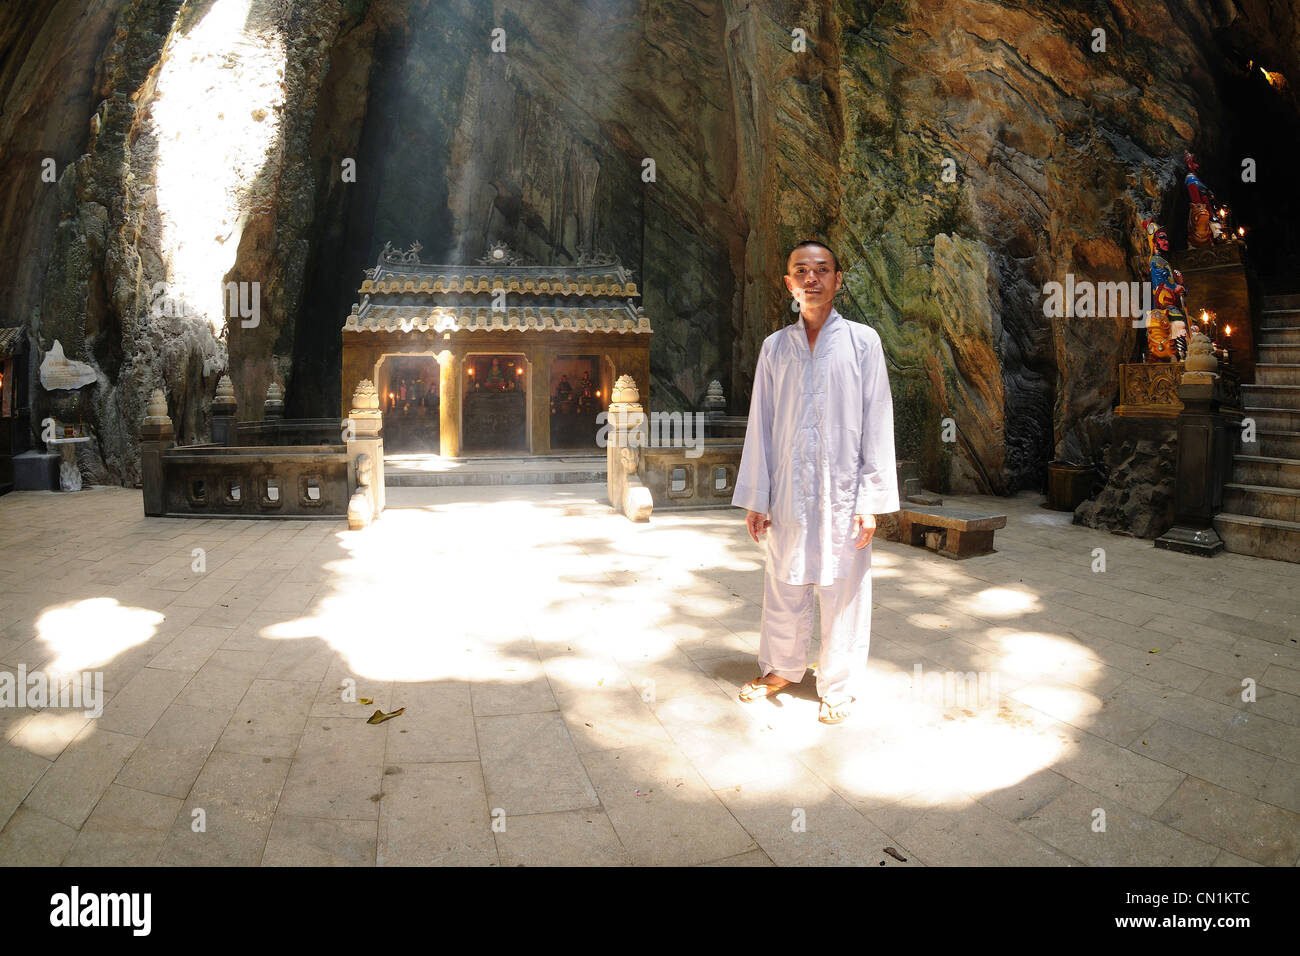 Montagne di marmo, sacerdote nel raggio di luce illuminando Huyen Khong grotta. Danang, Vietnam Foto Stock